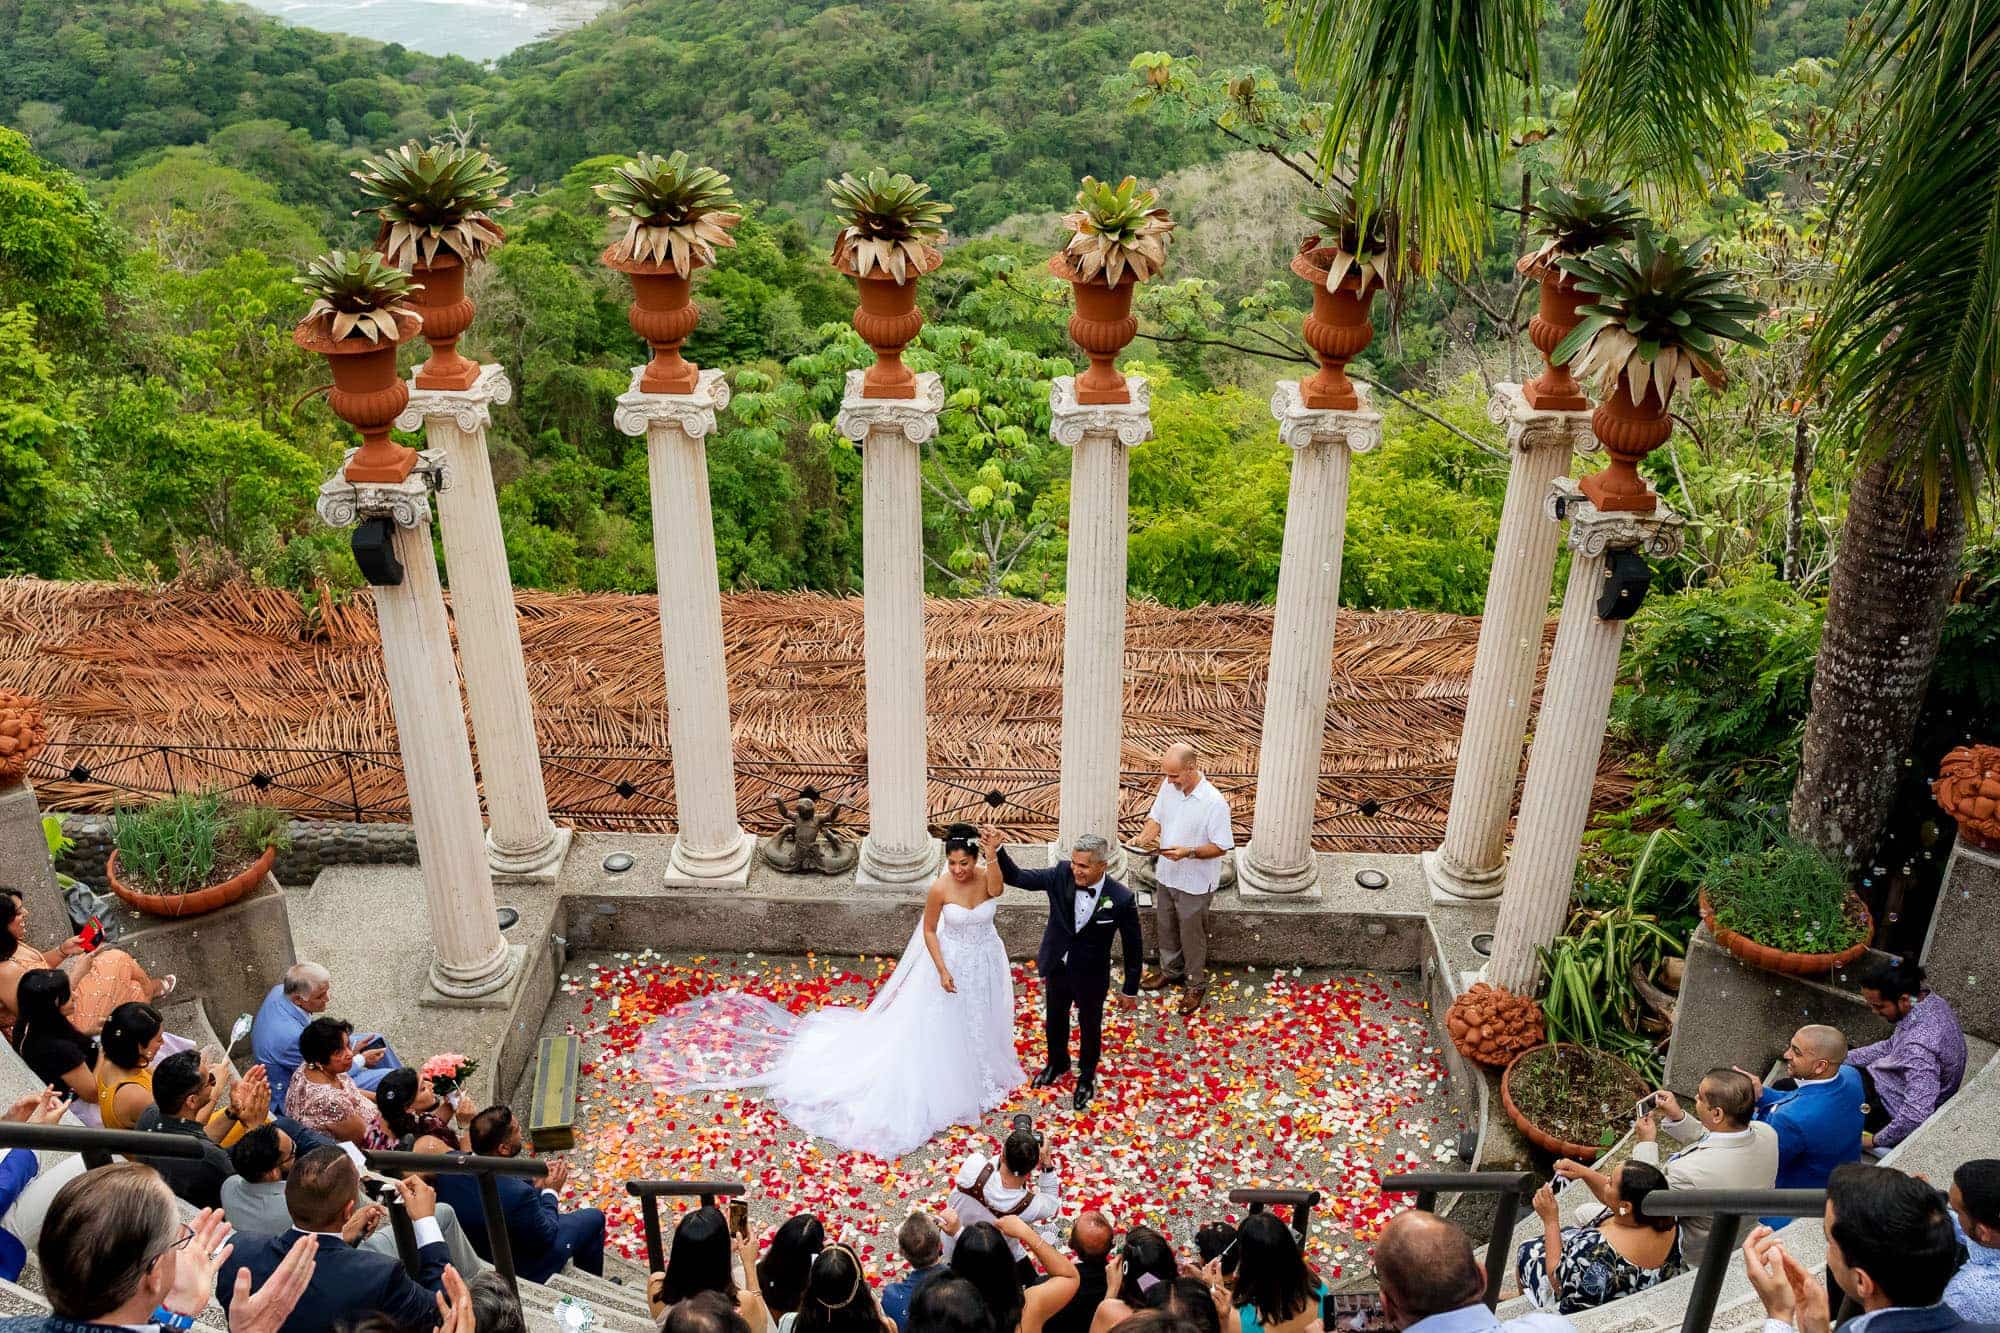 The symbolic wedding ceremony